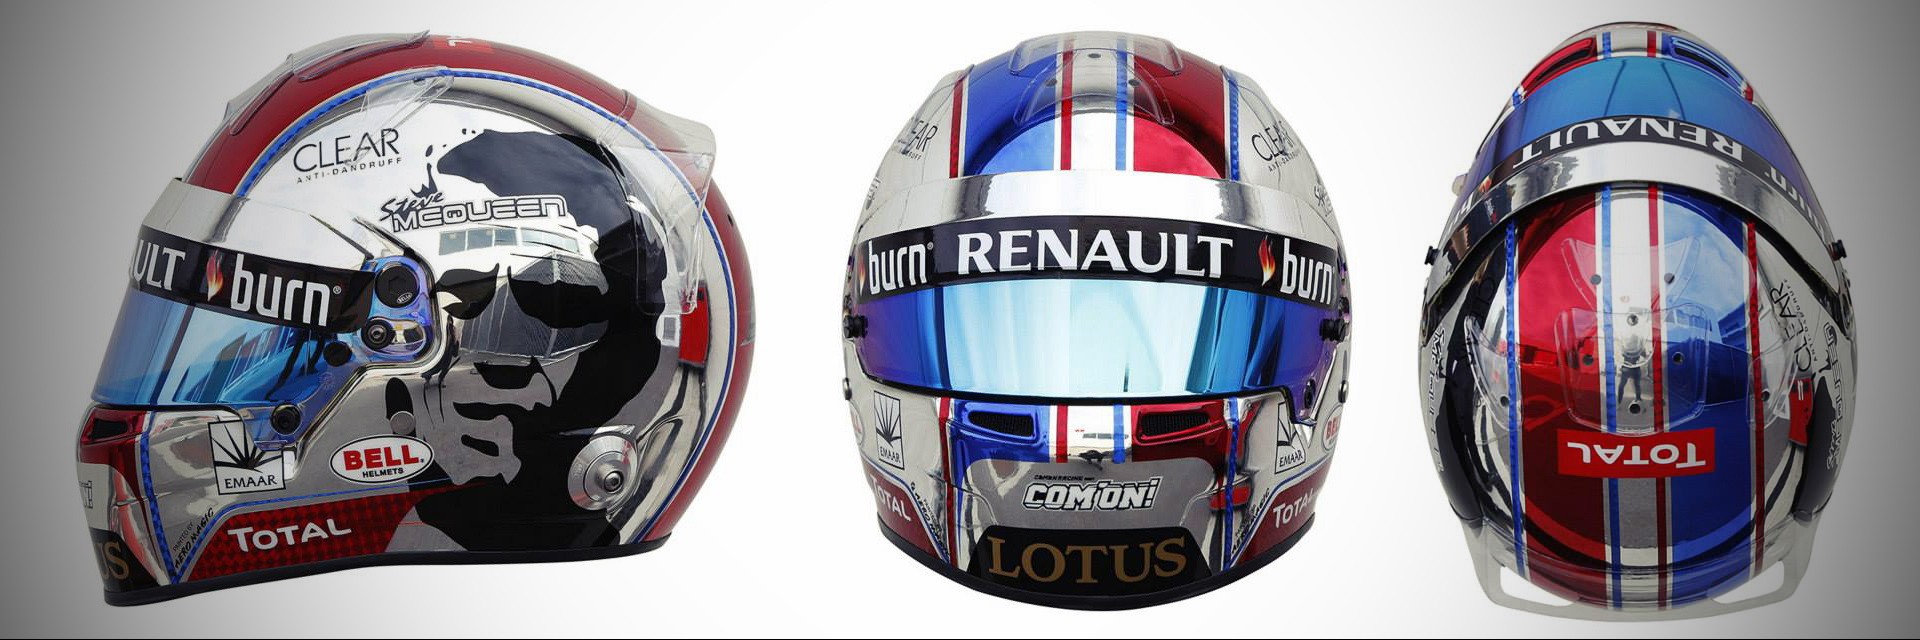 Шлем Романа Грожана на Гран-При США 2013 | 2013 USA Grand Prix helmet of Romain Grosjean